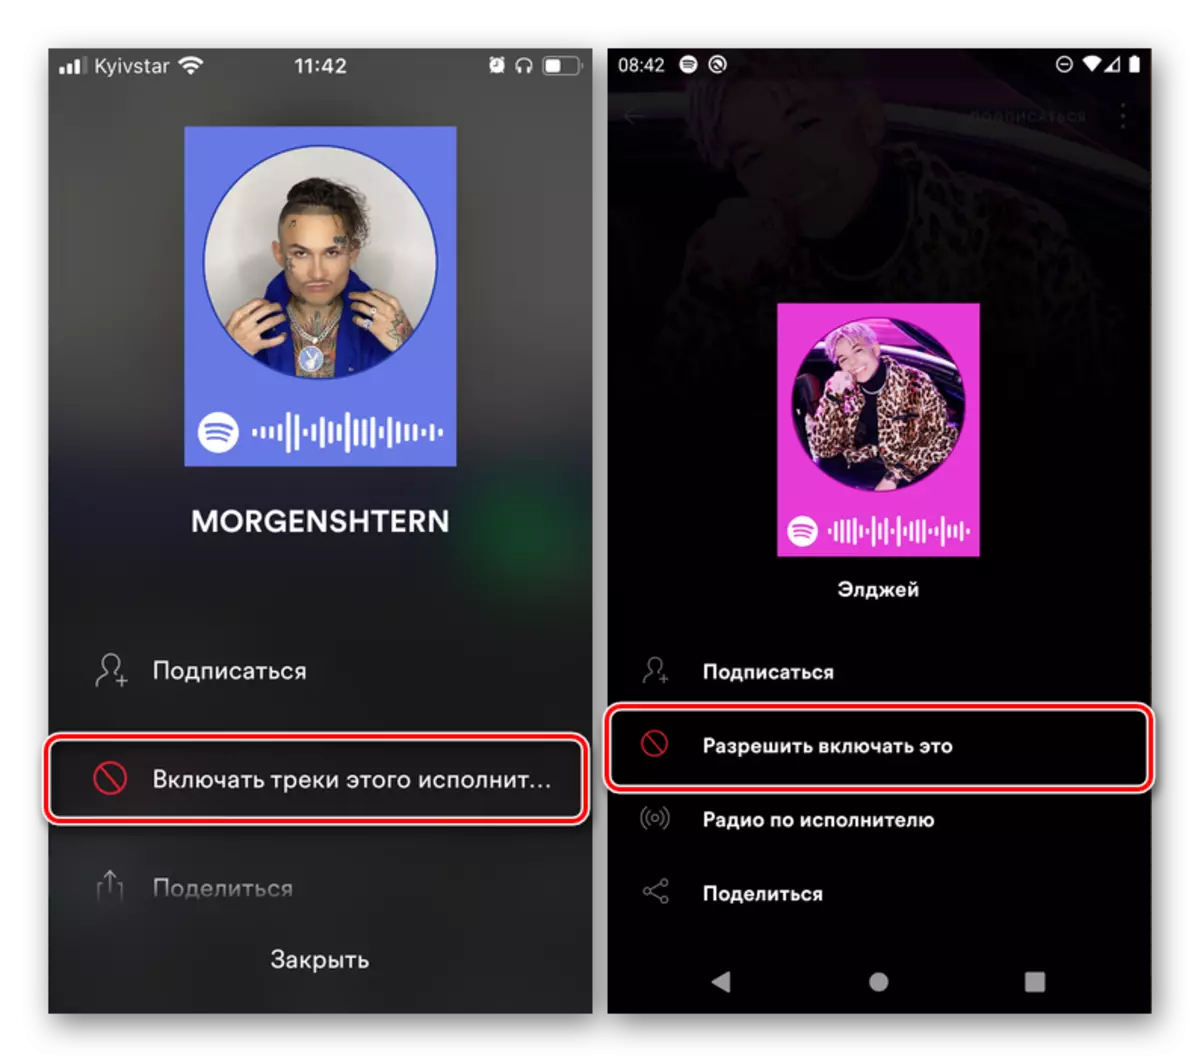 iPhone နှင့် Android အတွက် Spotify Application တွင်၎င်းကိုဖယ်ရှားခြင်းနှင့်၎င်းကိုဖယ်ရှားရန်စွမ်းရည်ကိုပိတ်ဆို့ခြင်း၏ရလဒ်